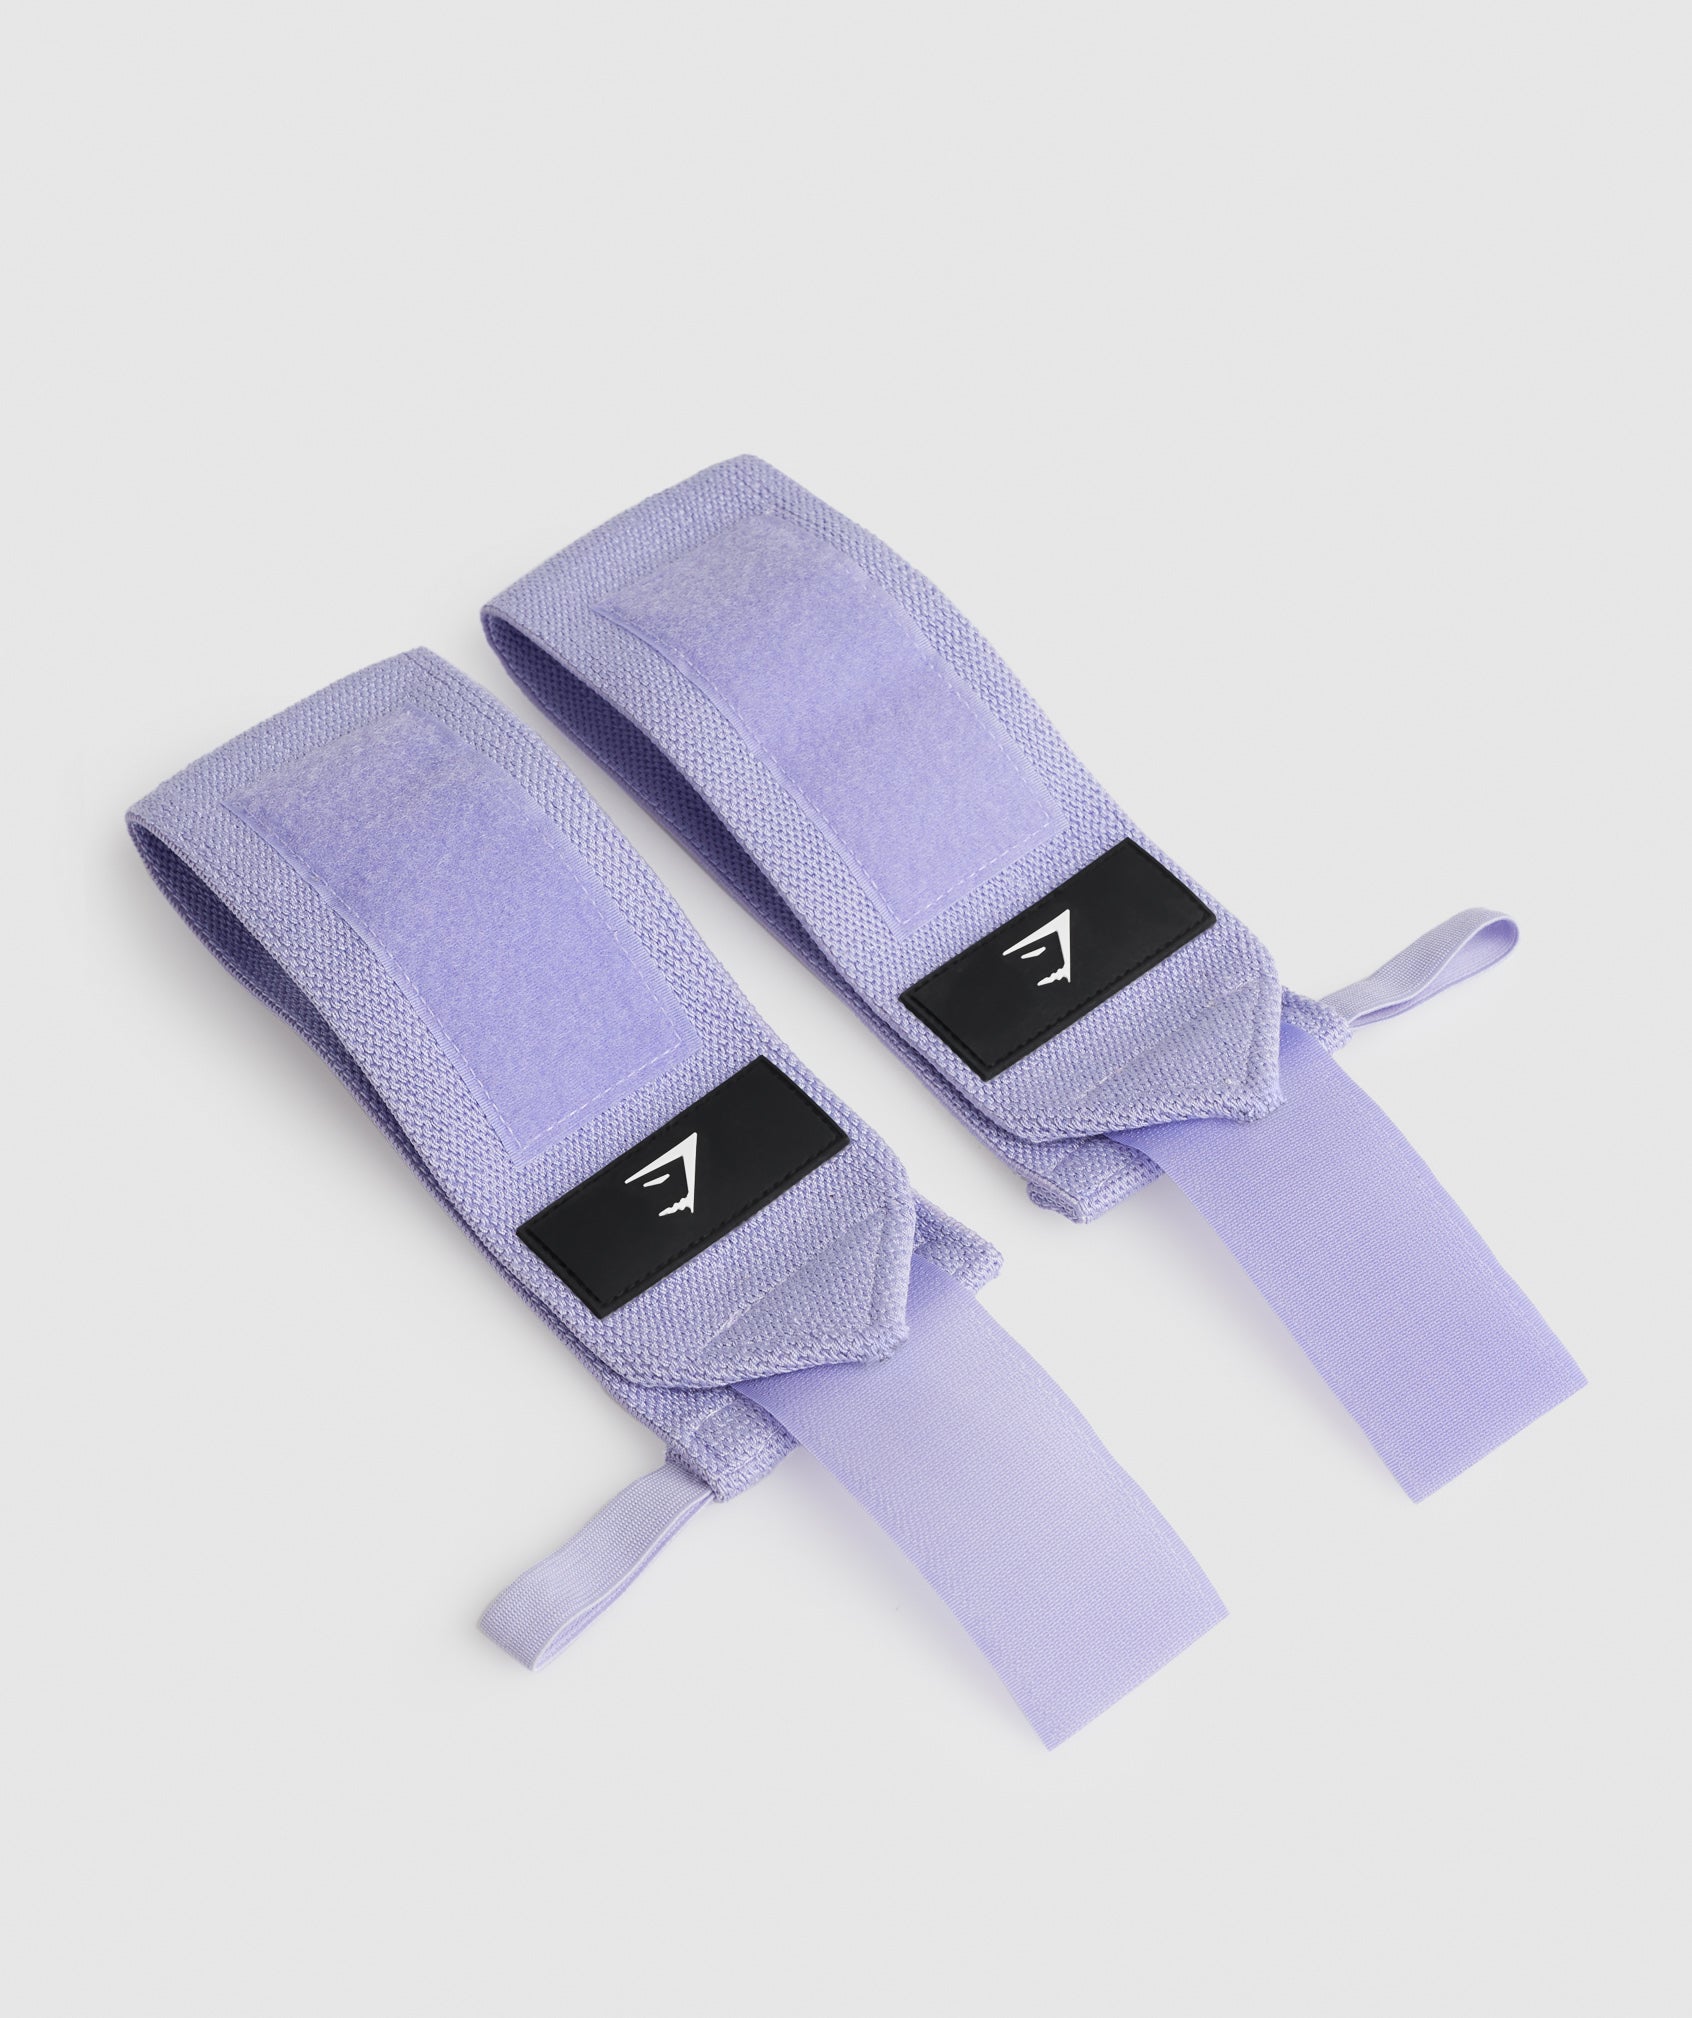 Gymshark Wrist Straps - Powdered Lilac